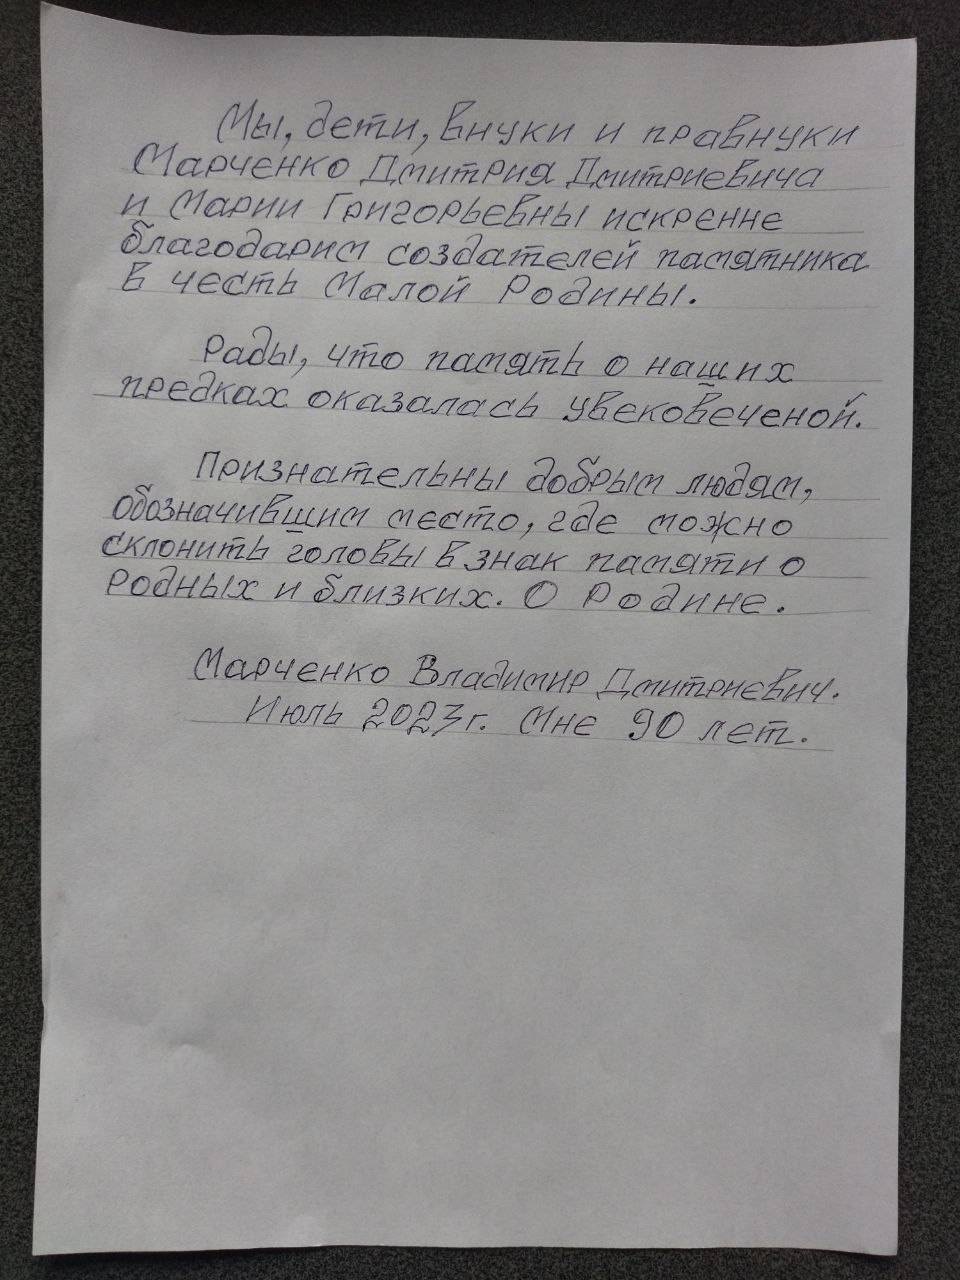 Отзыв Марченко Владимира Дмитриевича